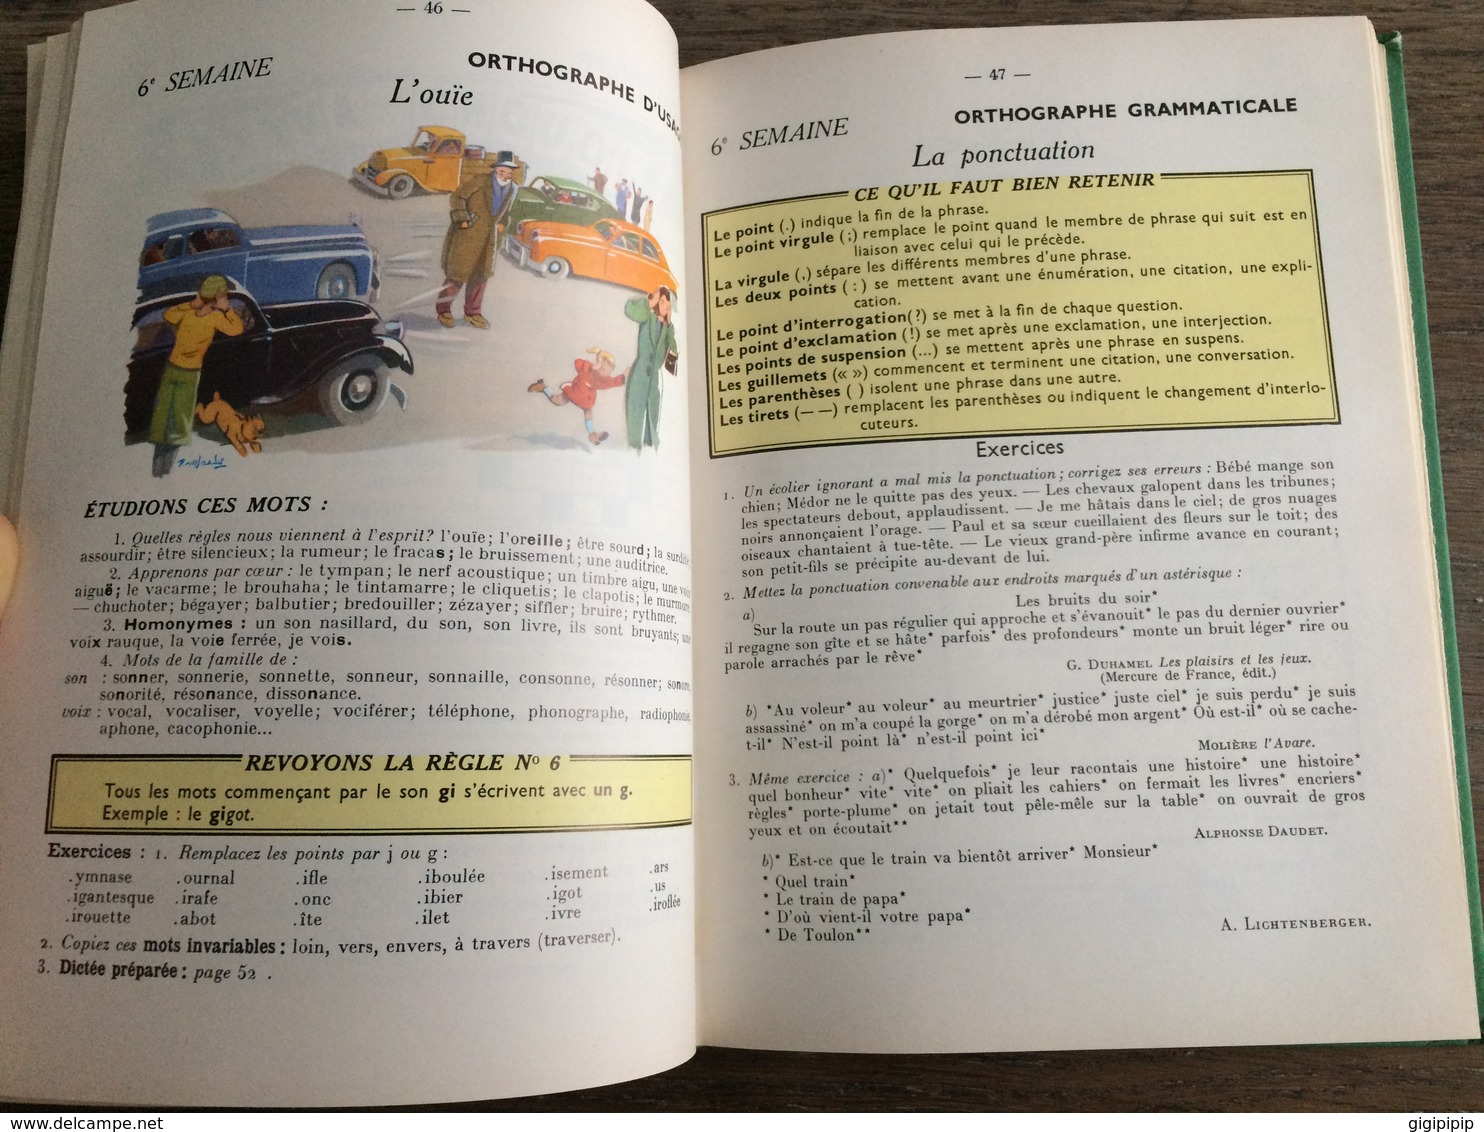 Ancien Livre SCOLAIRE CE GRAMMAIRE CONJUGAISON ORTHOGRAPHE Illustrations Ray Lambert RAYLAMBERT ECOLE 1970 - 6-12 Ans